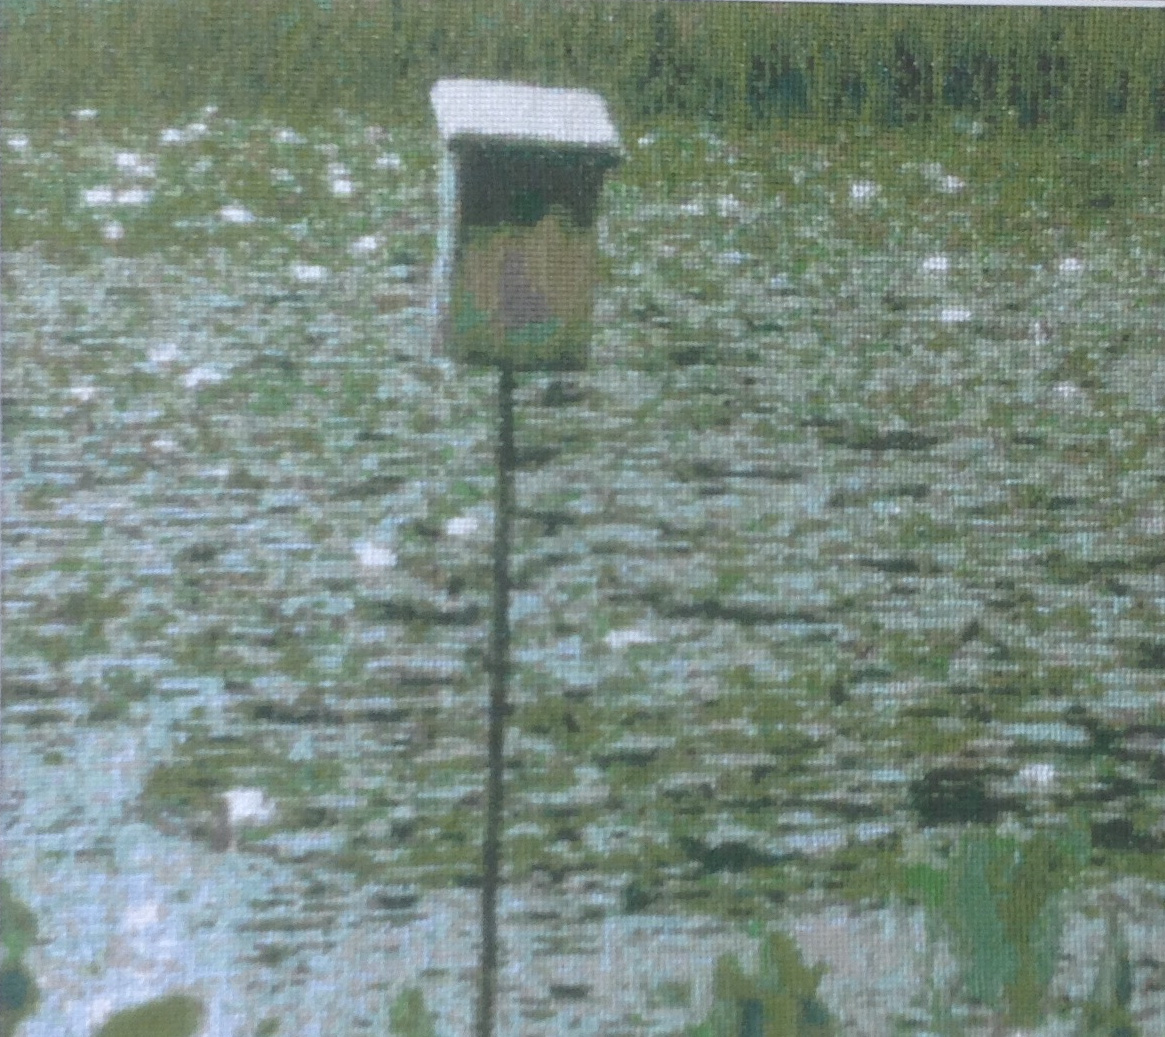 E. Gagne's crosstitch showing a birdhouse near a pond.